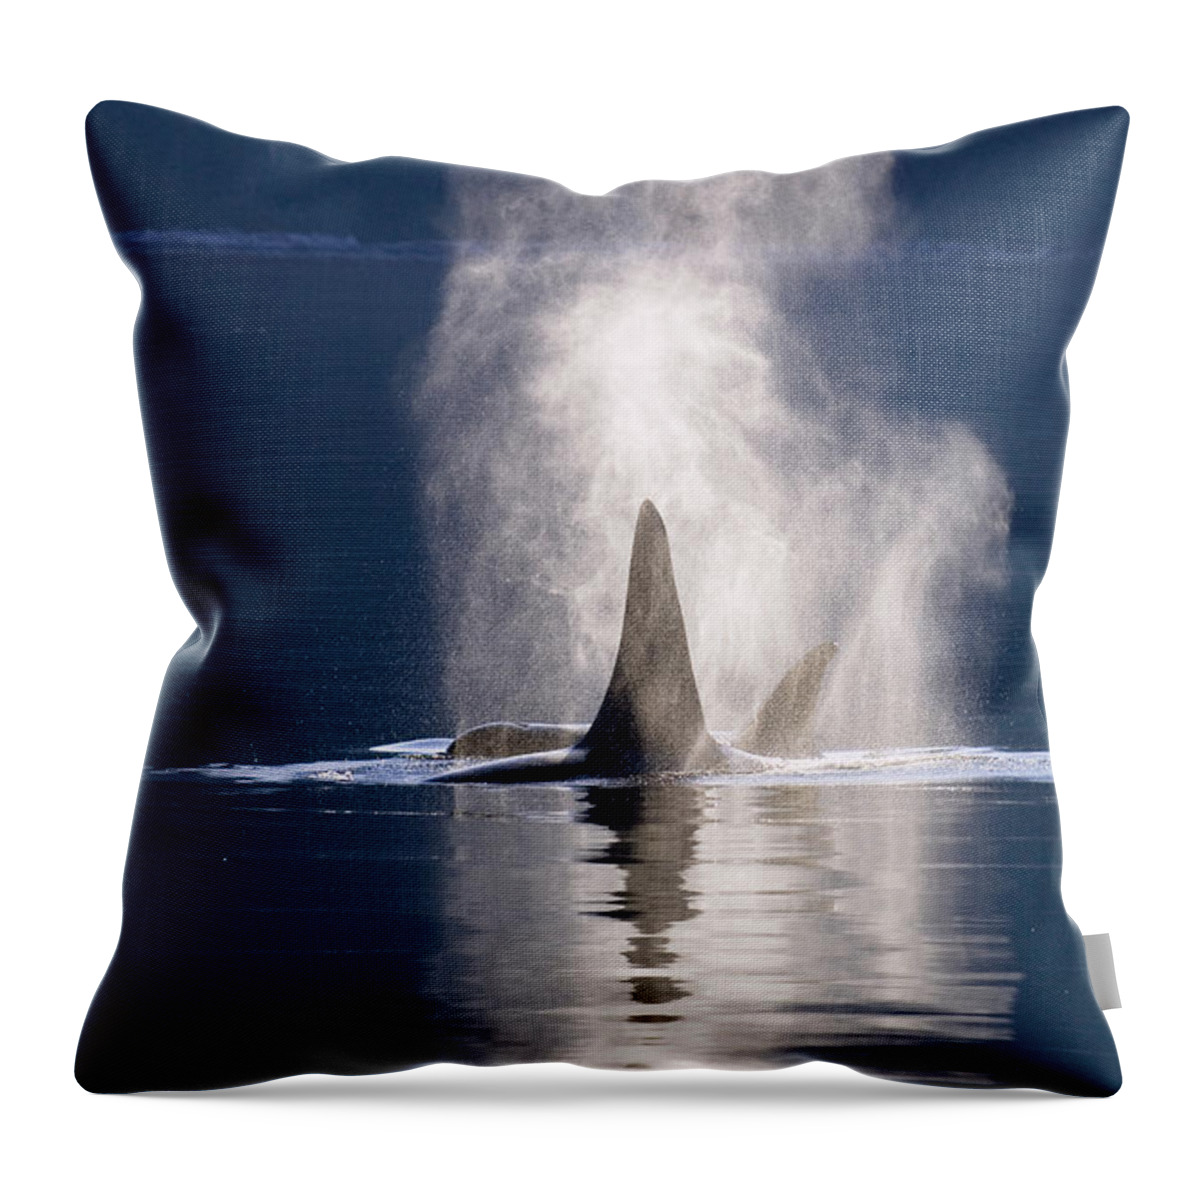 00999098 Throw Pillow featuring the photograph Orca Pair Spouting Southeast Alaska by Flip Nicklin